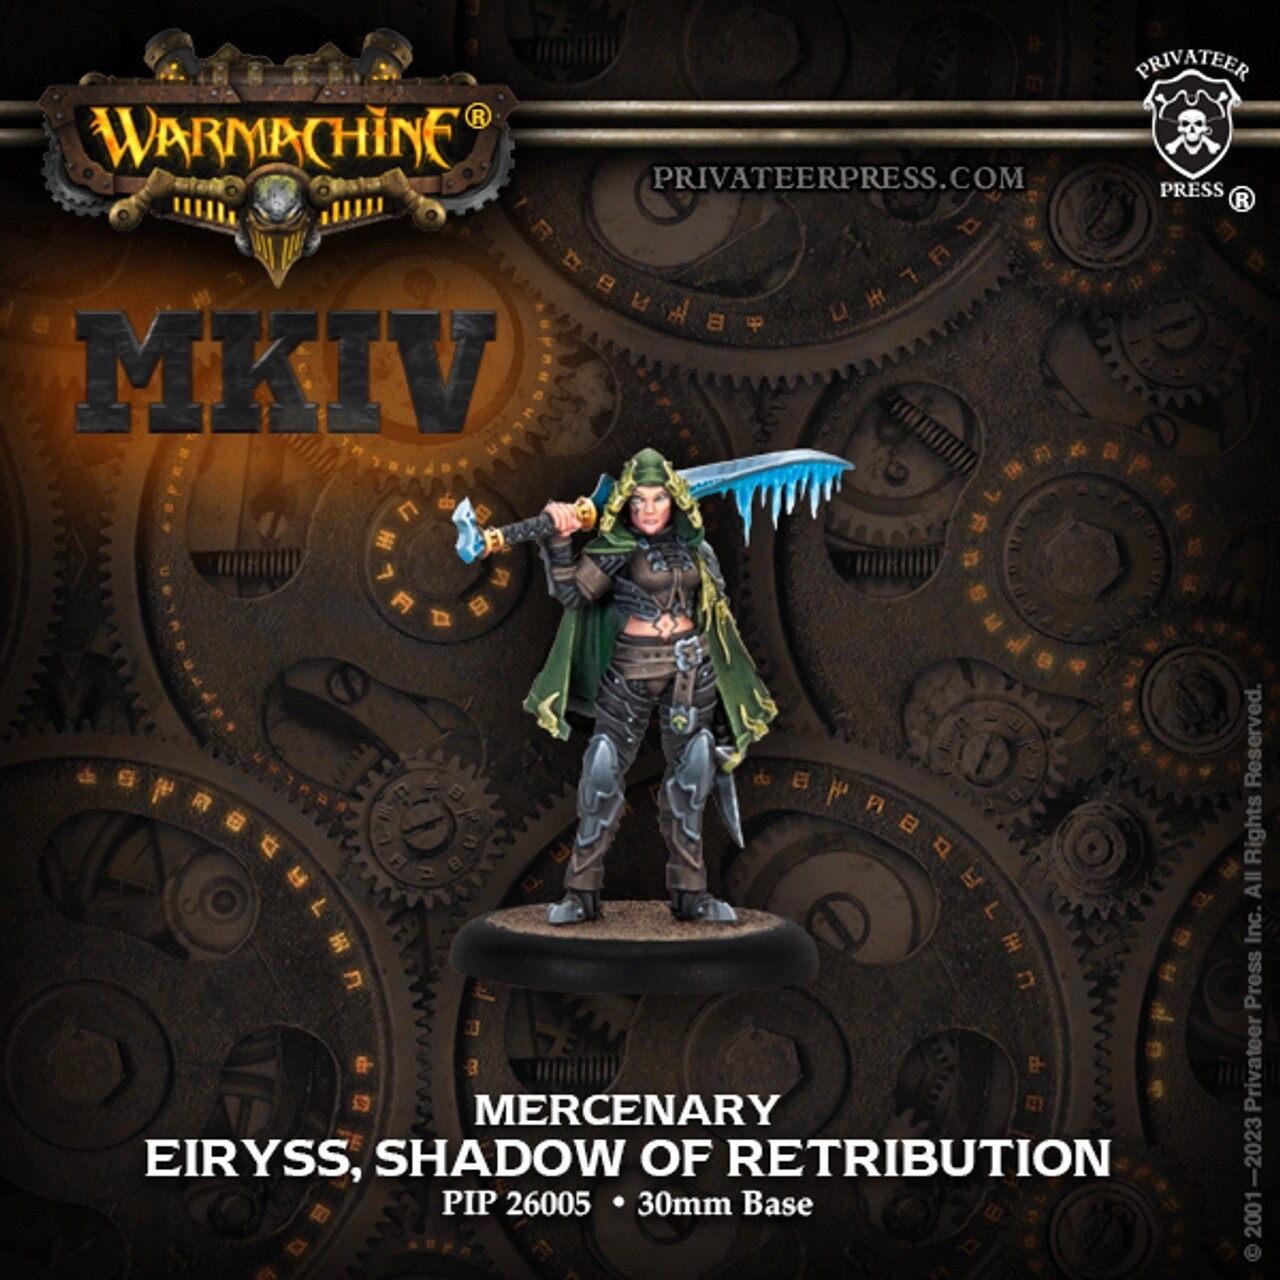 Eiryss, Shadow of Retribution